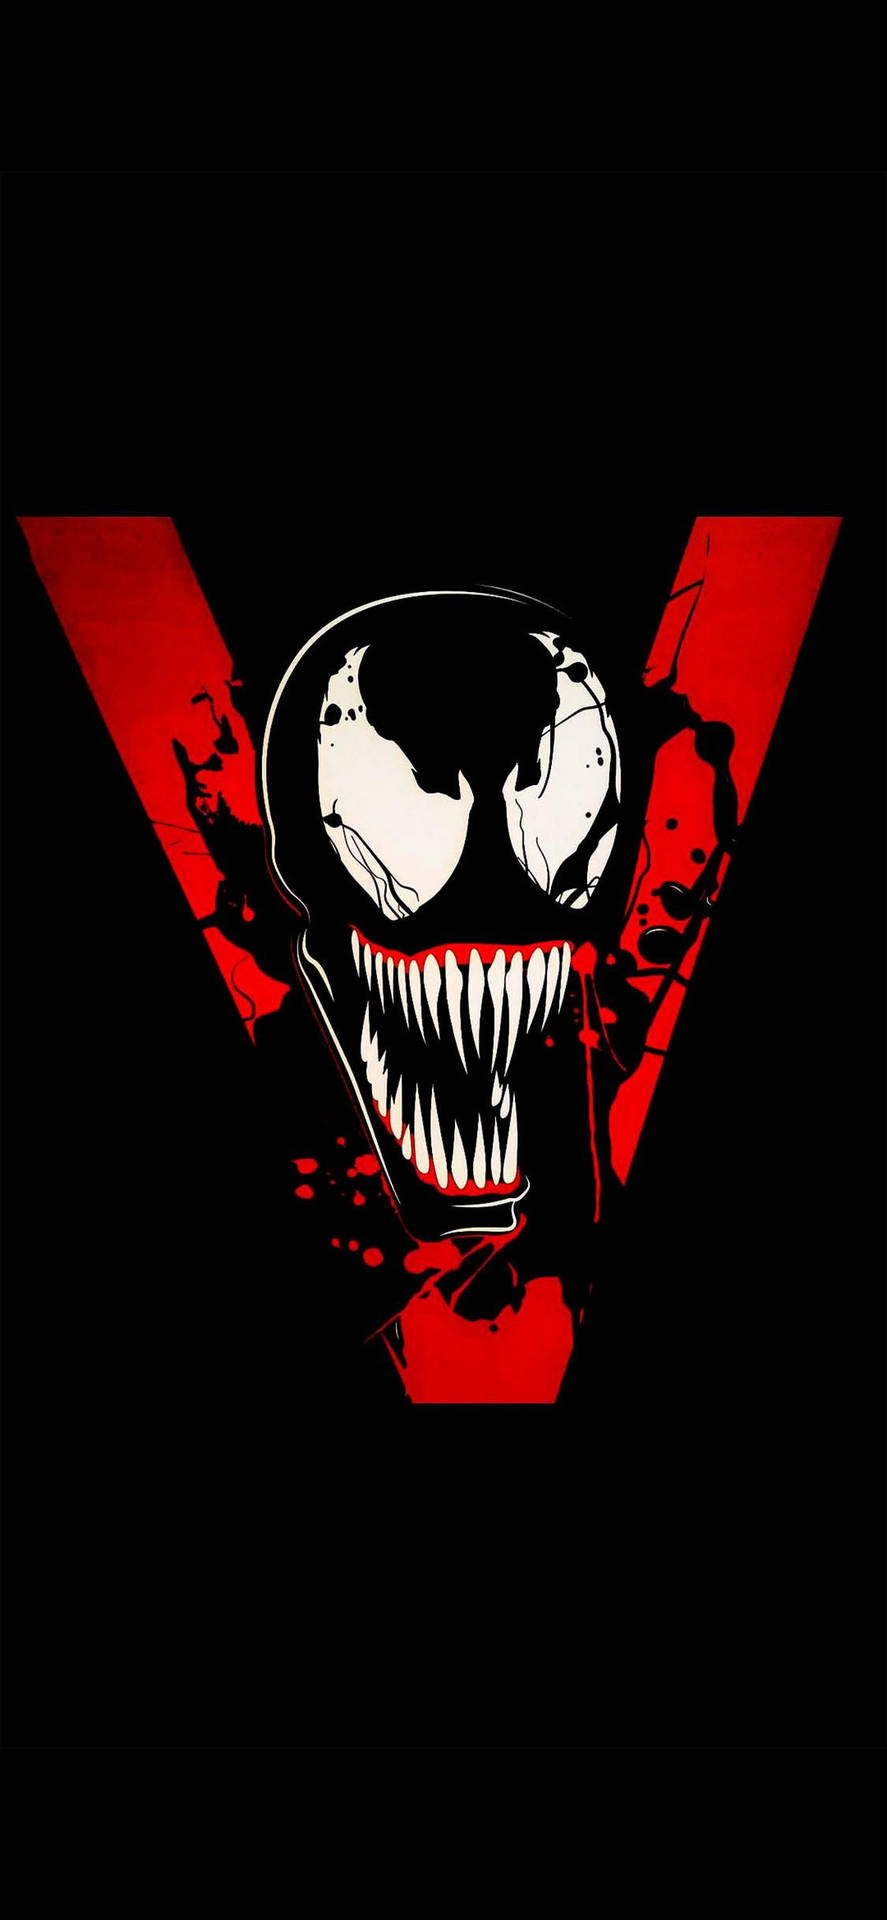 Marvel Anti Hero Venom Iphone